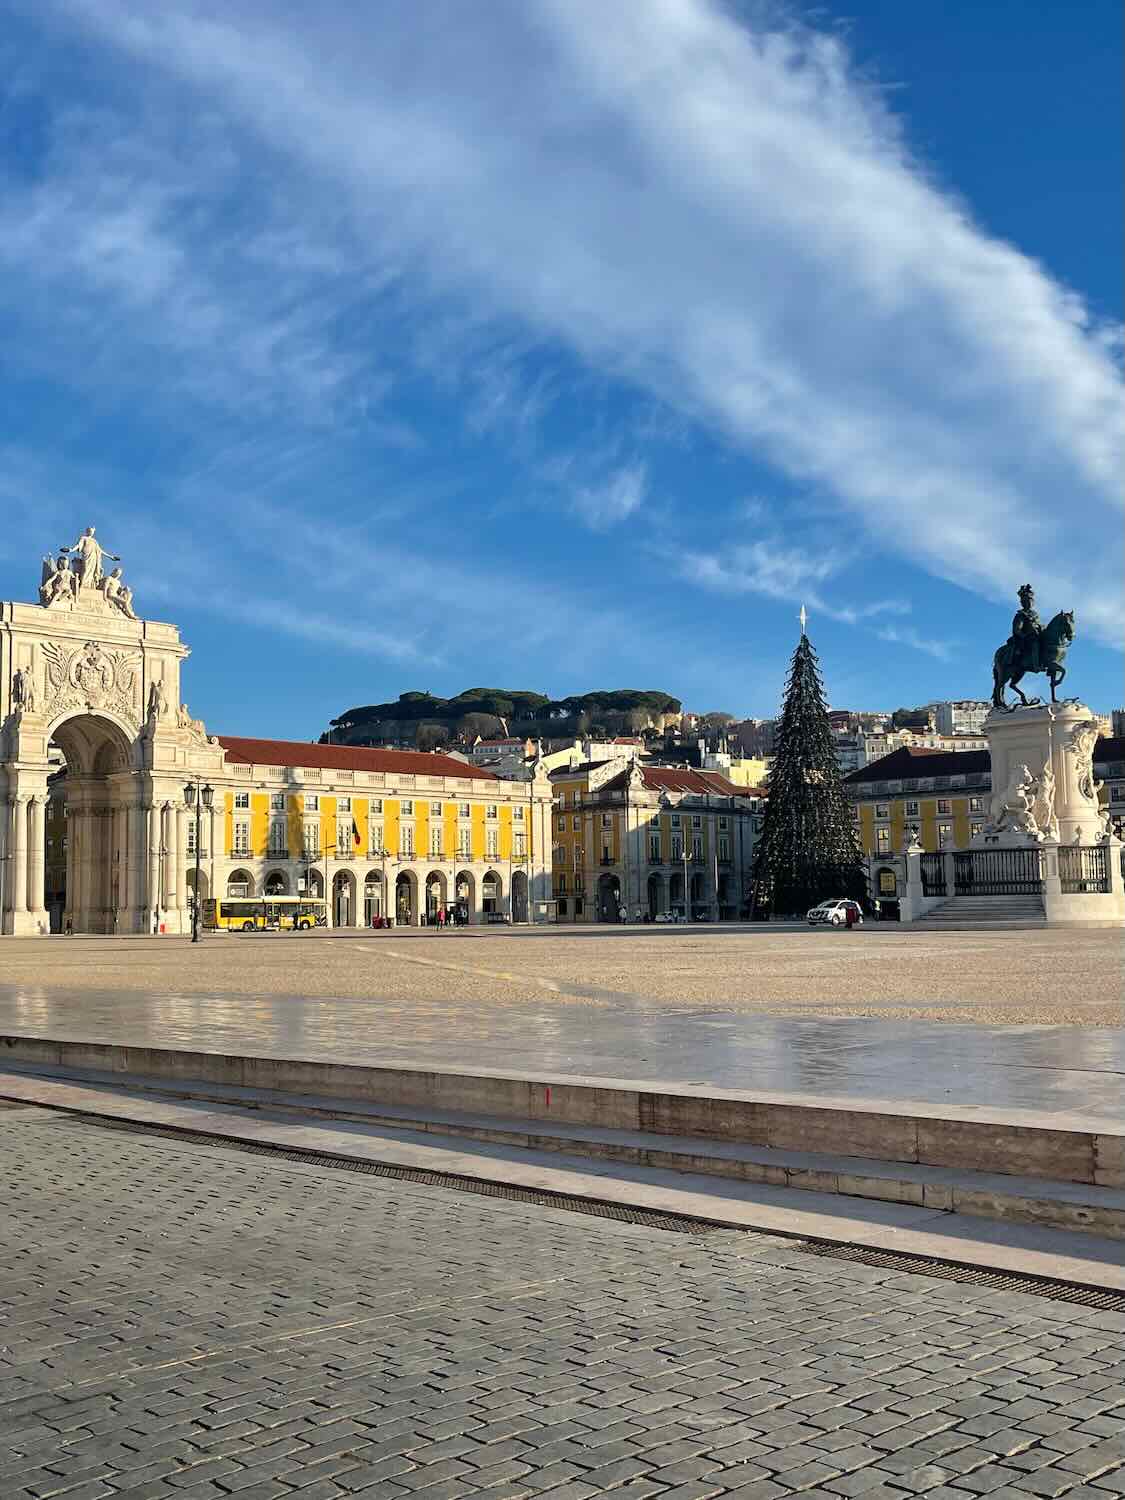 Lisbon's grand Praça do Comércio basks in the sunlight, featuring the majestic Arco da Rua Augusta.